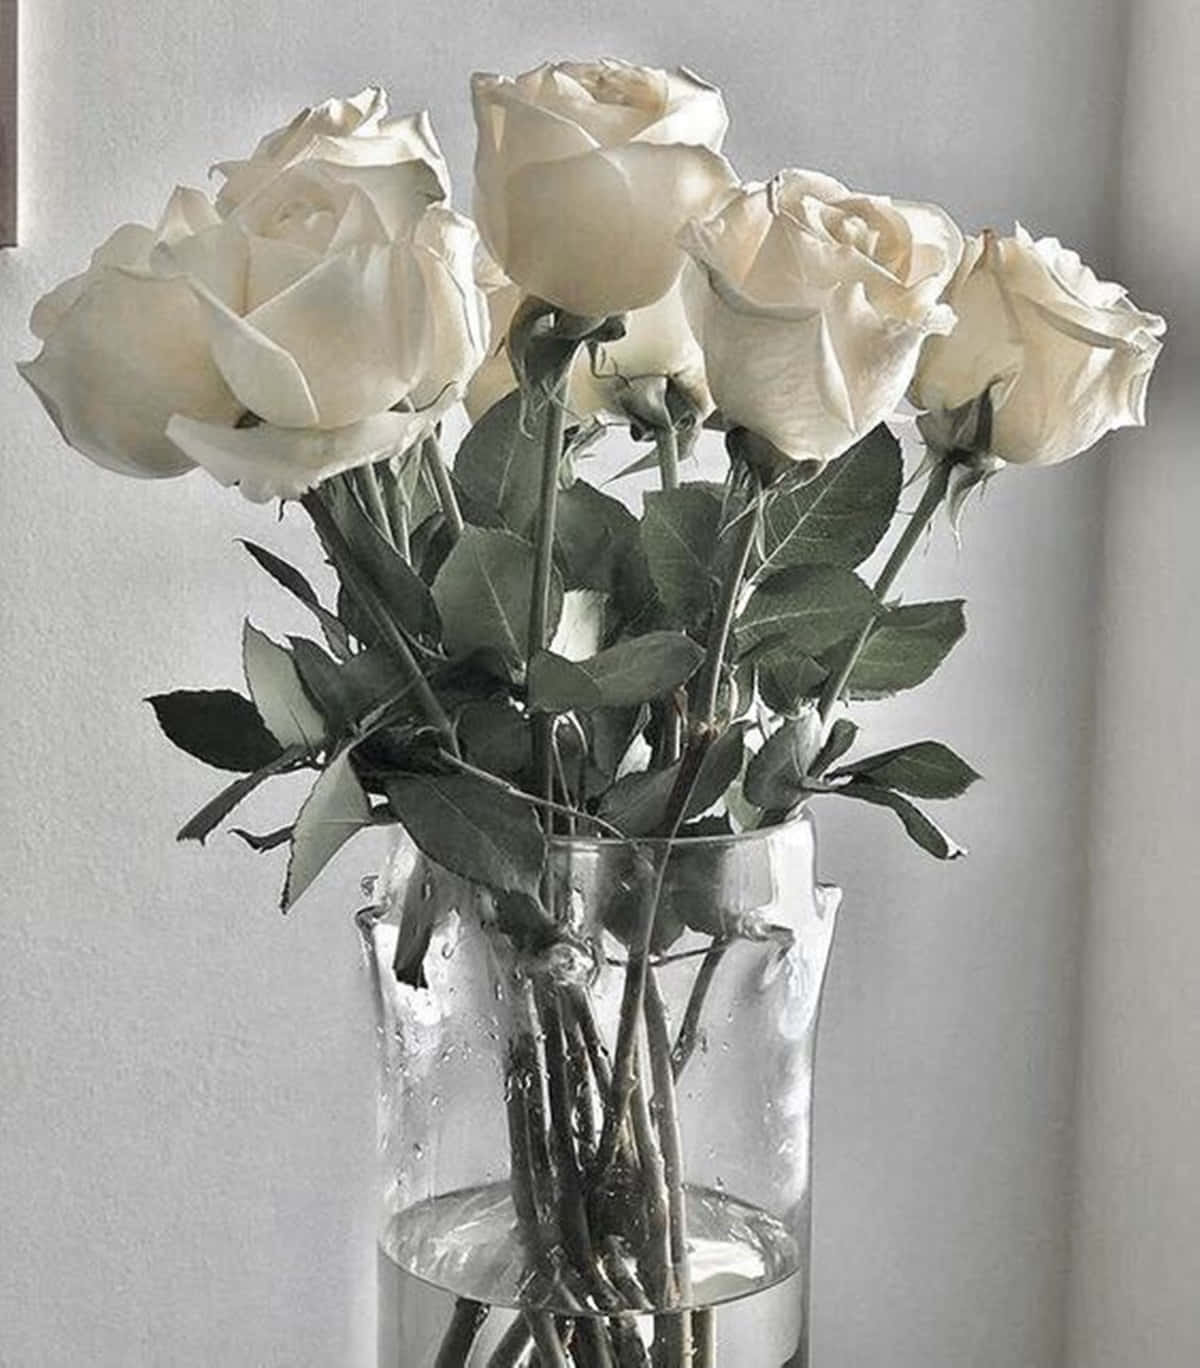  Weiße Rosen Hintergrundbild 1200x1368. Download White Roses Aesthetic Macro Shot On Glass Vase Wallpaper